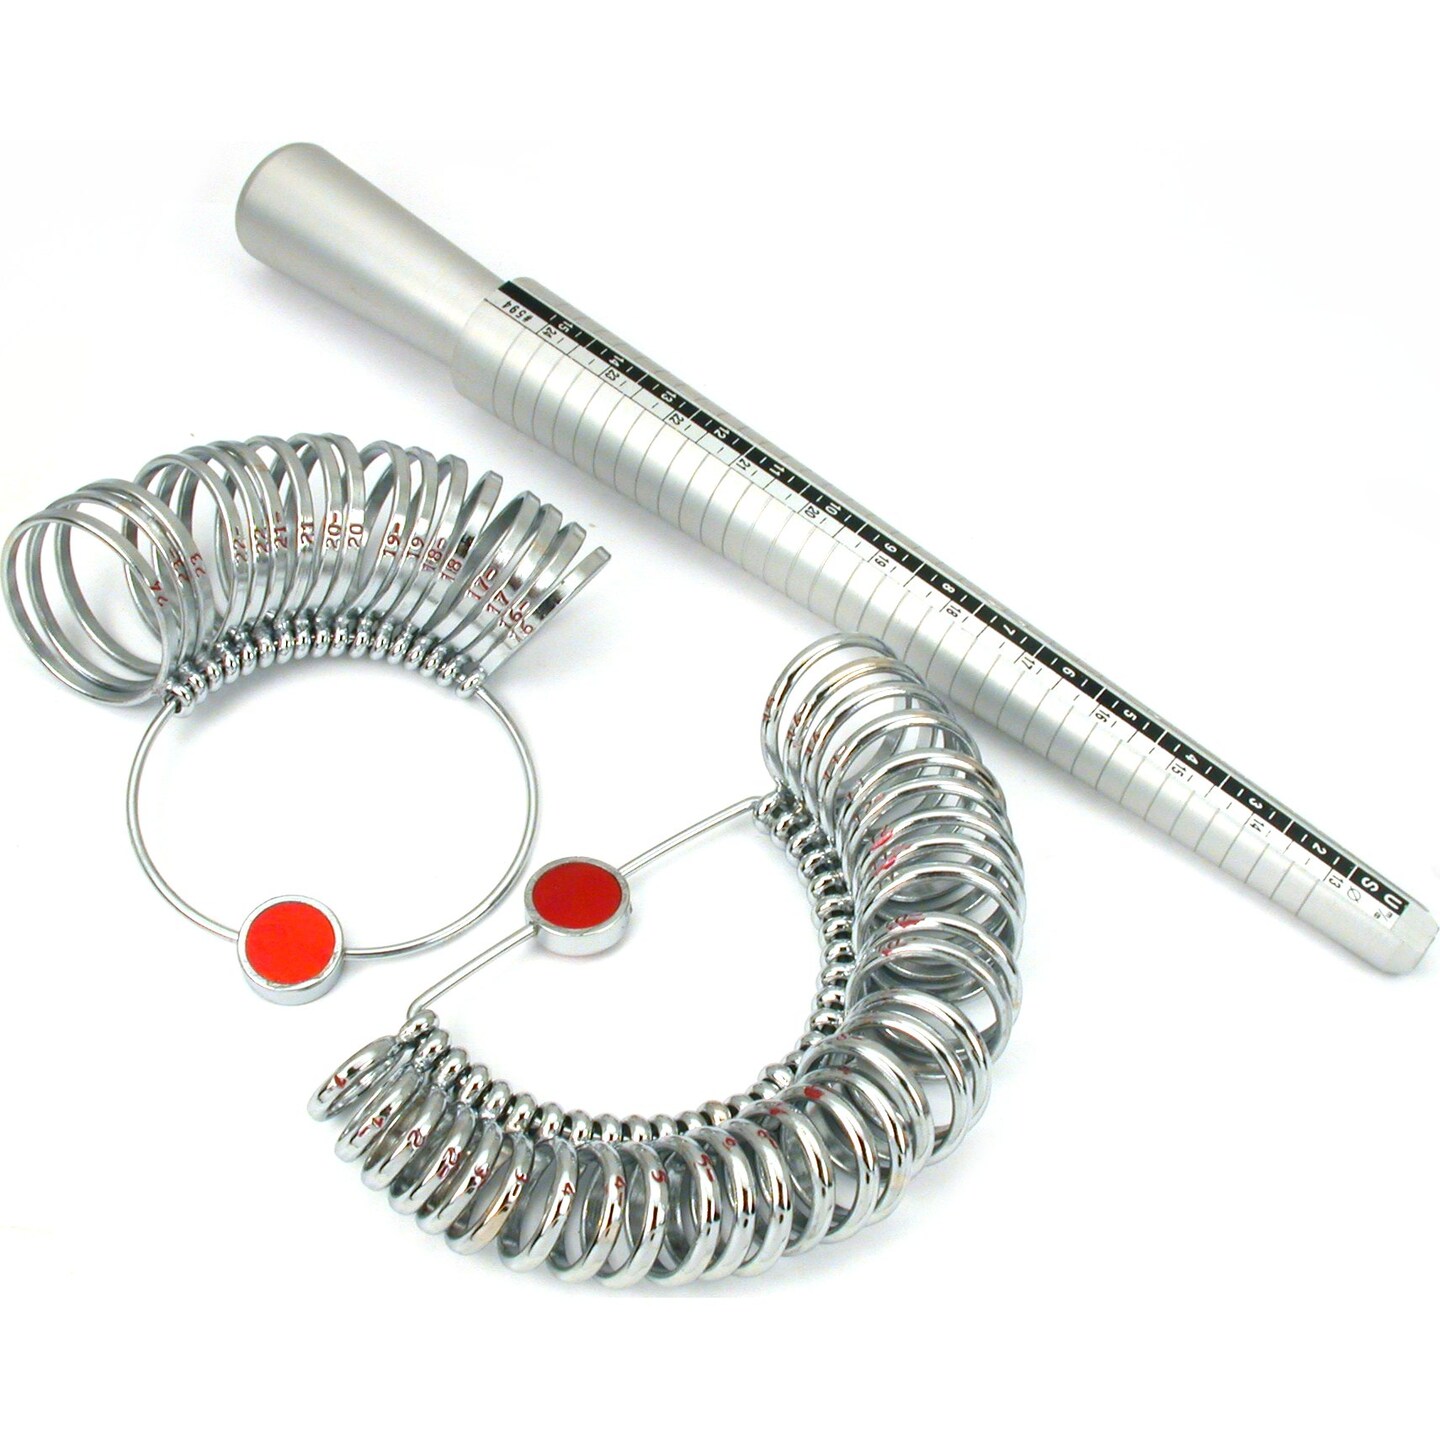 Aluminum Ring Stick Ring Sizer Gauge Jewelers Tool New